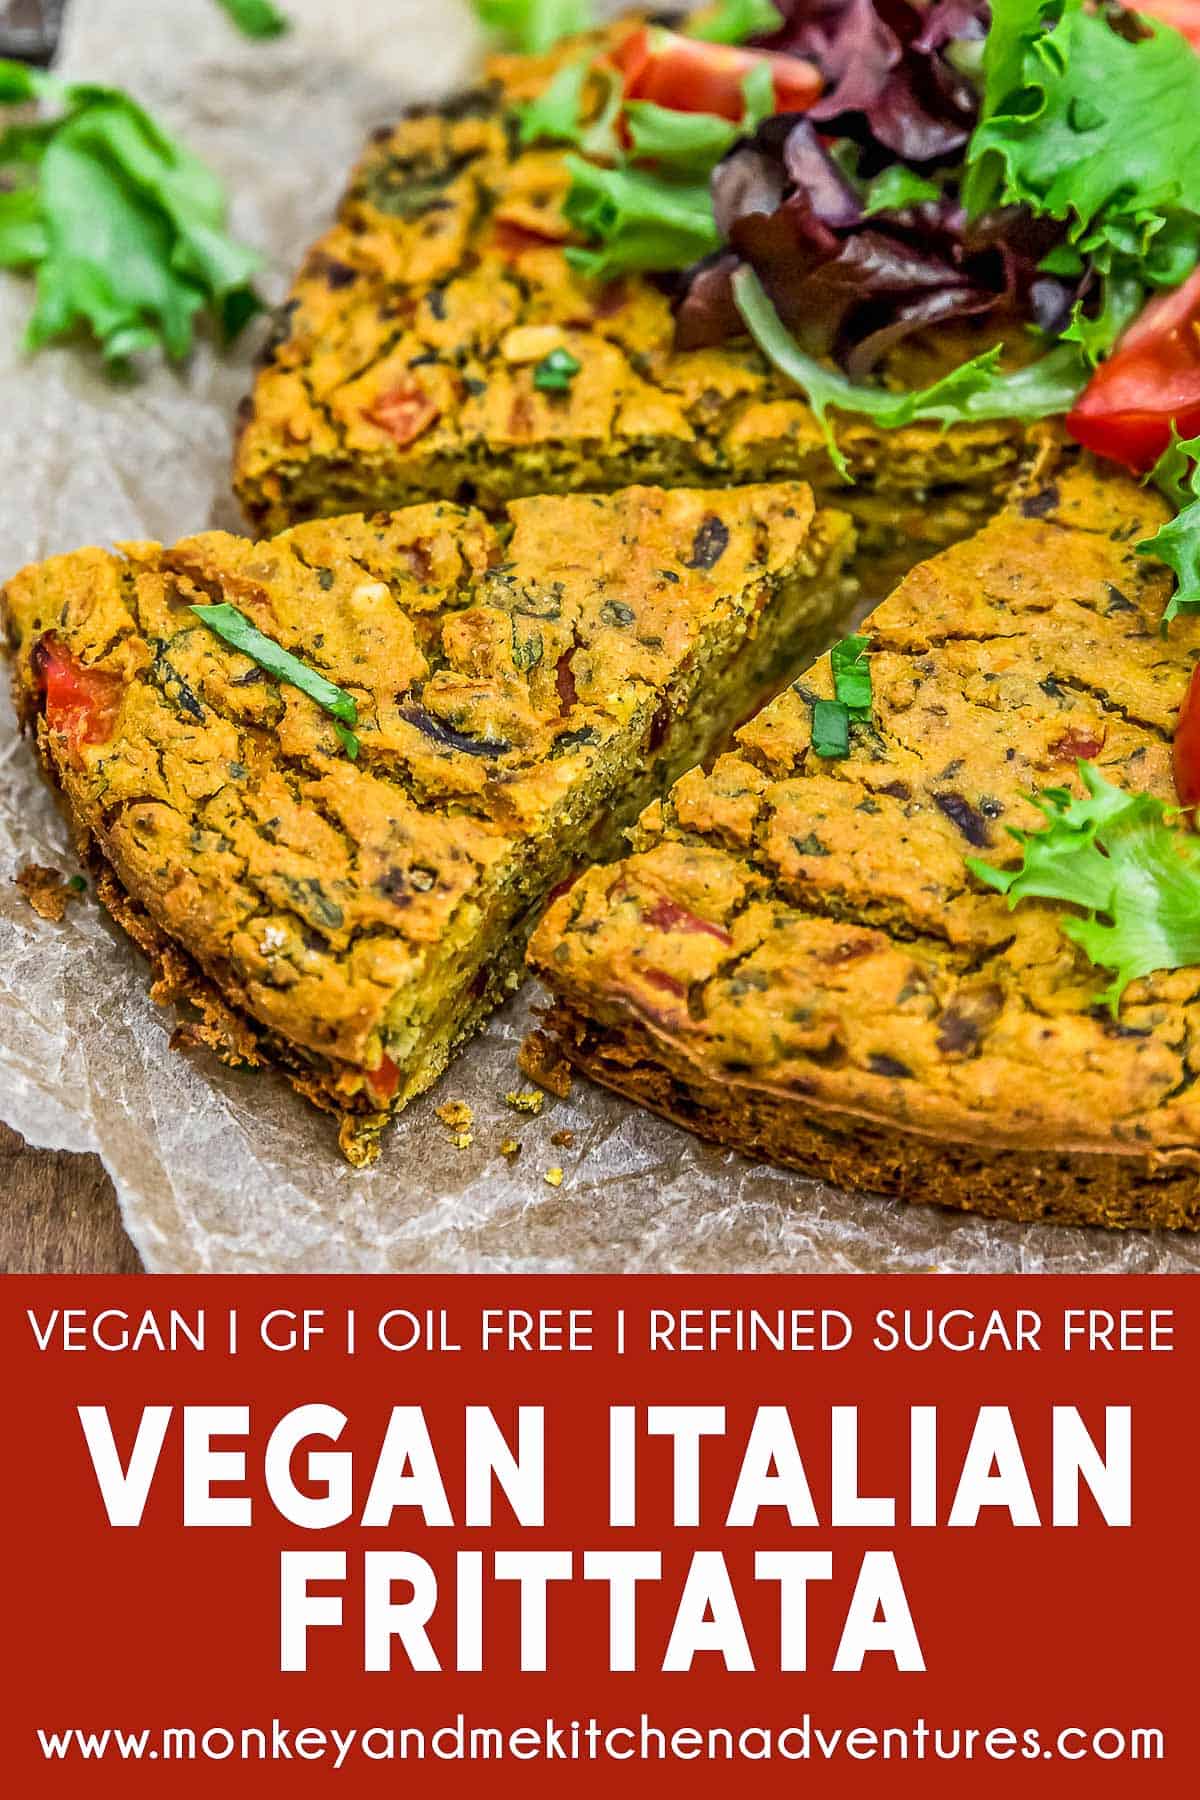 Vegan Italian Frittata with text description